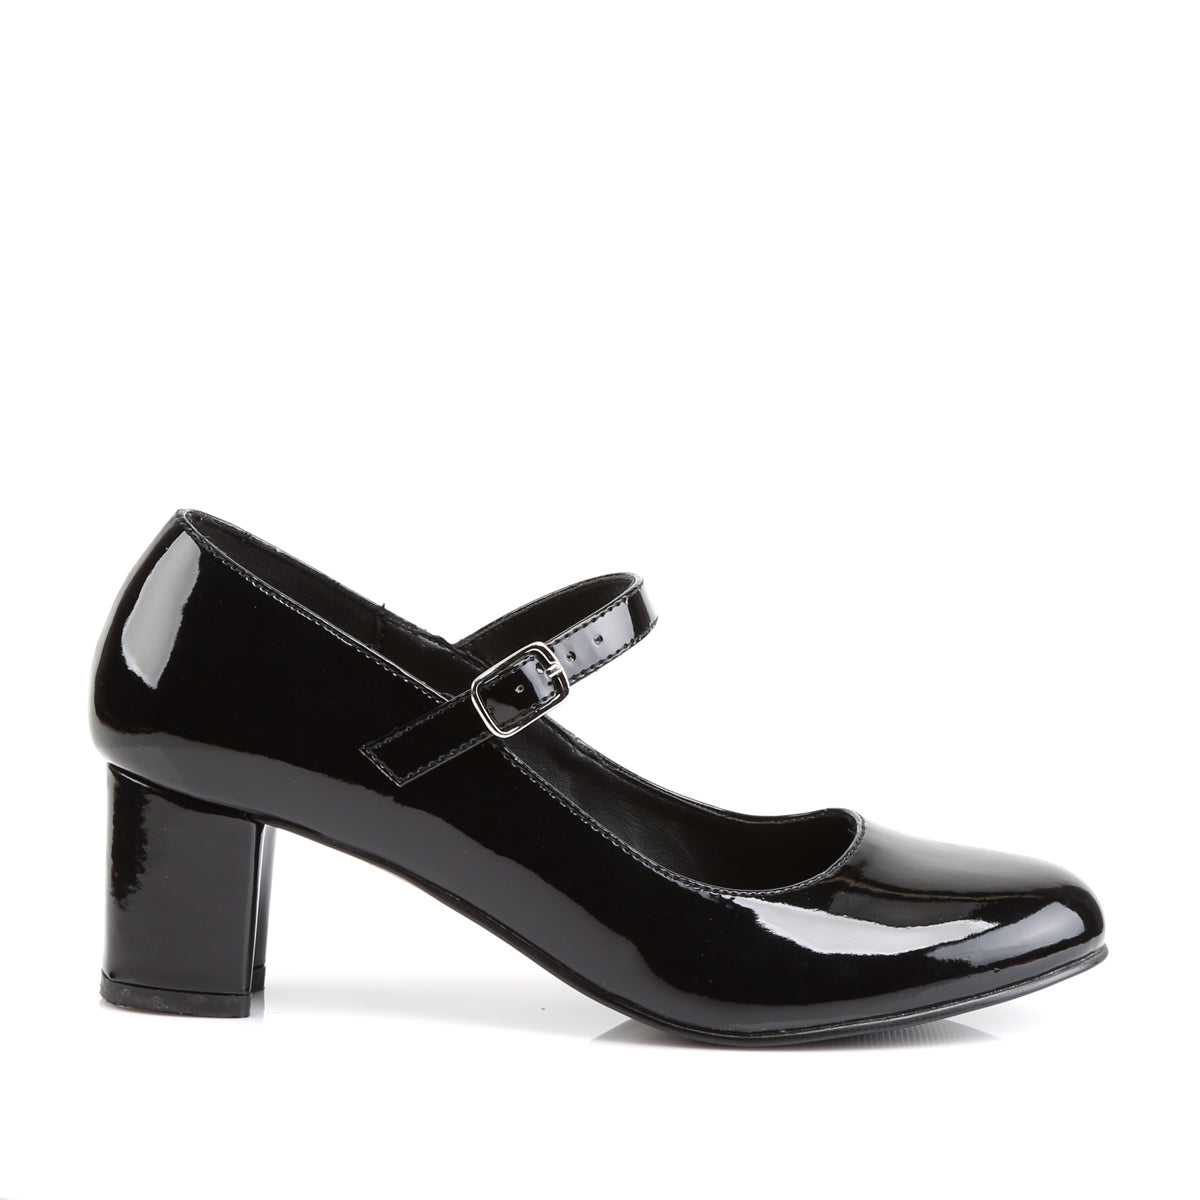 SCHOOLGIRL-50 Funtasma Black Patent Women's Shoes (Fancy Dress Costume Shoes)